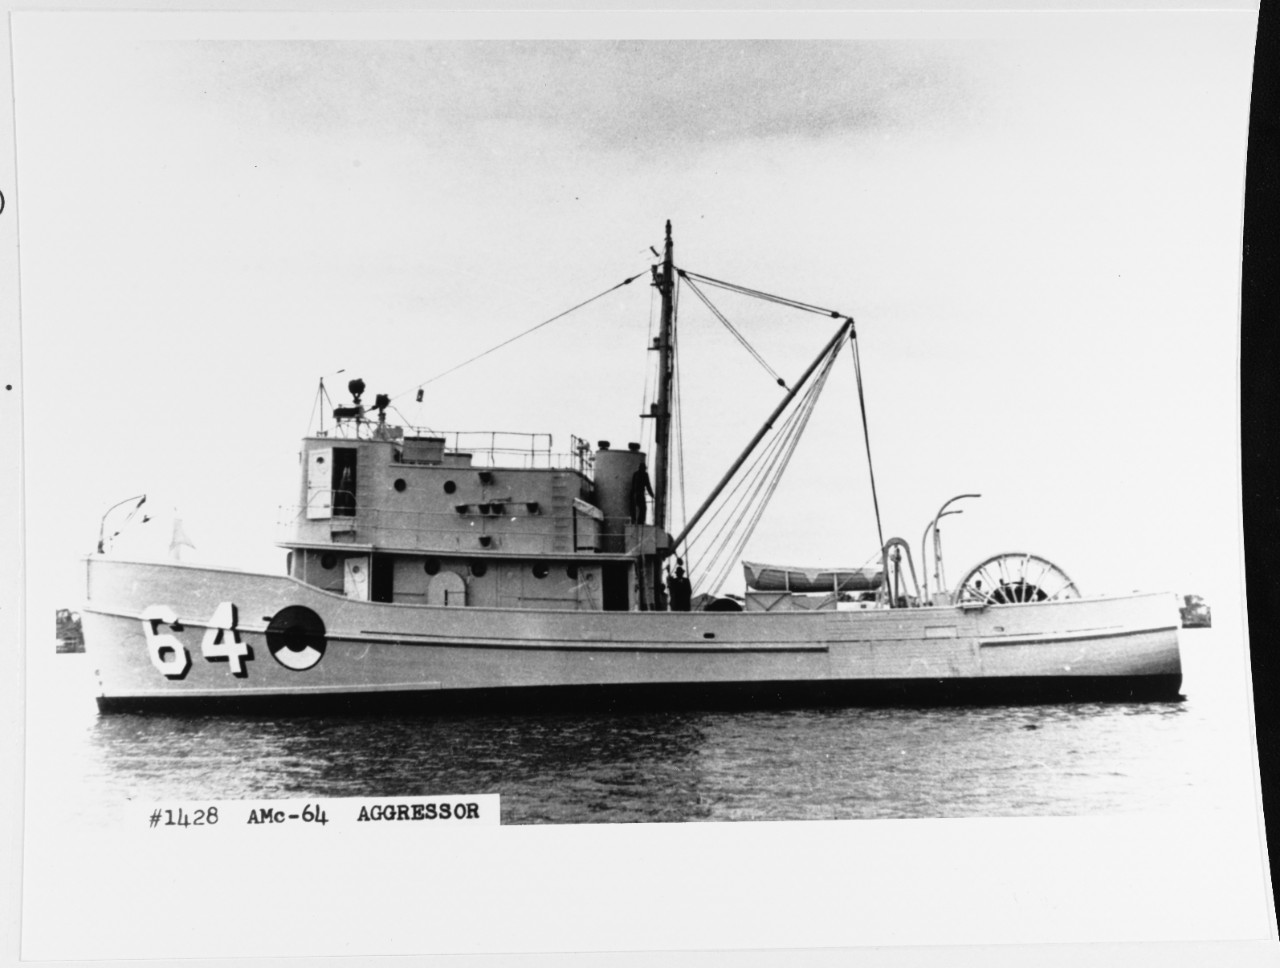 USS AGGRESSOR (Am-64)